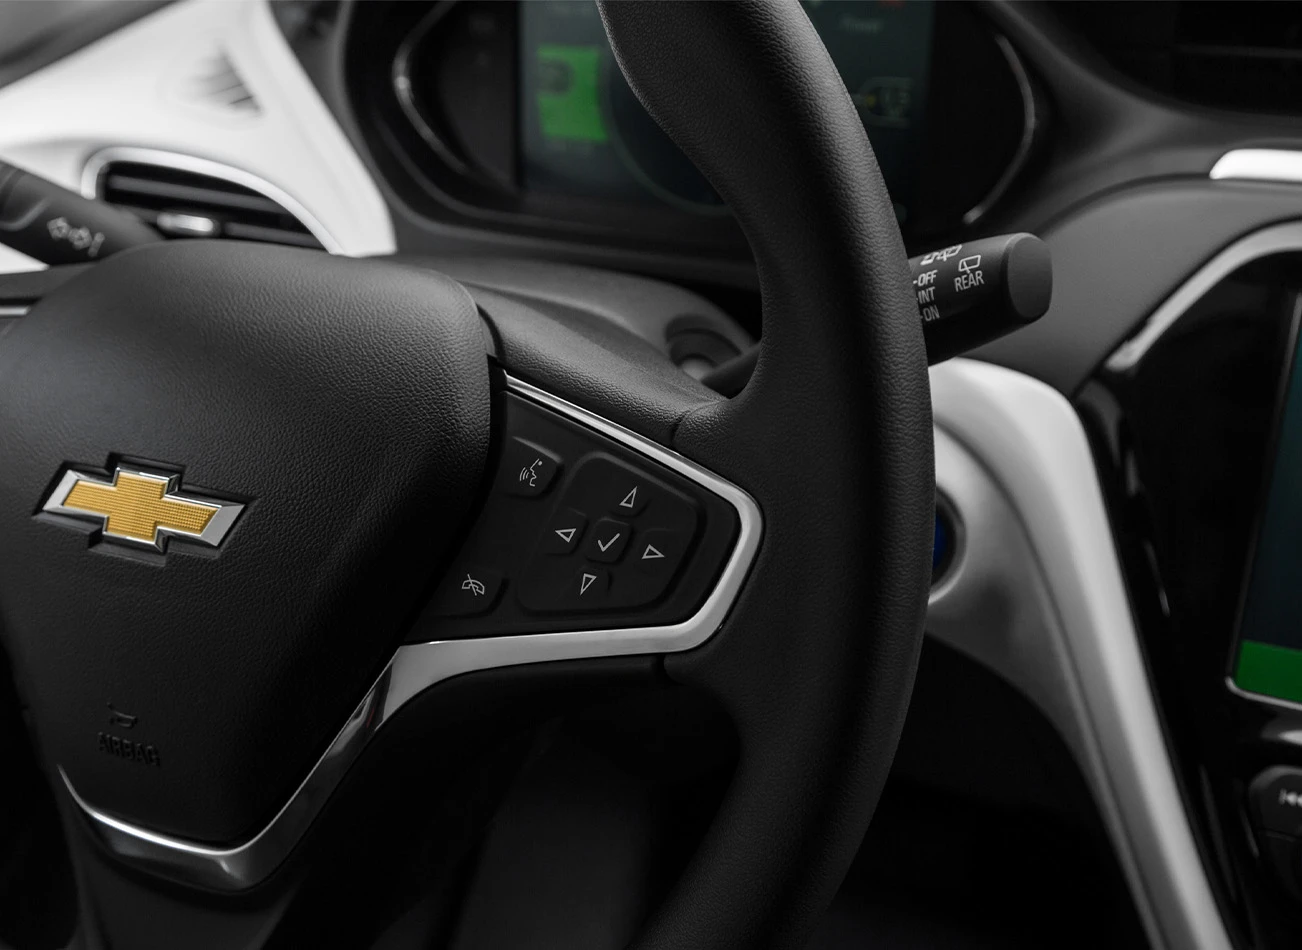 2017 Chevrolet Bolt EV Review: Steering wheel and chevrolet emblem | CarMax